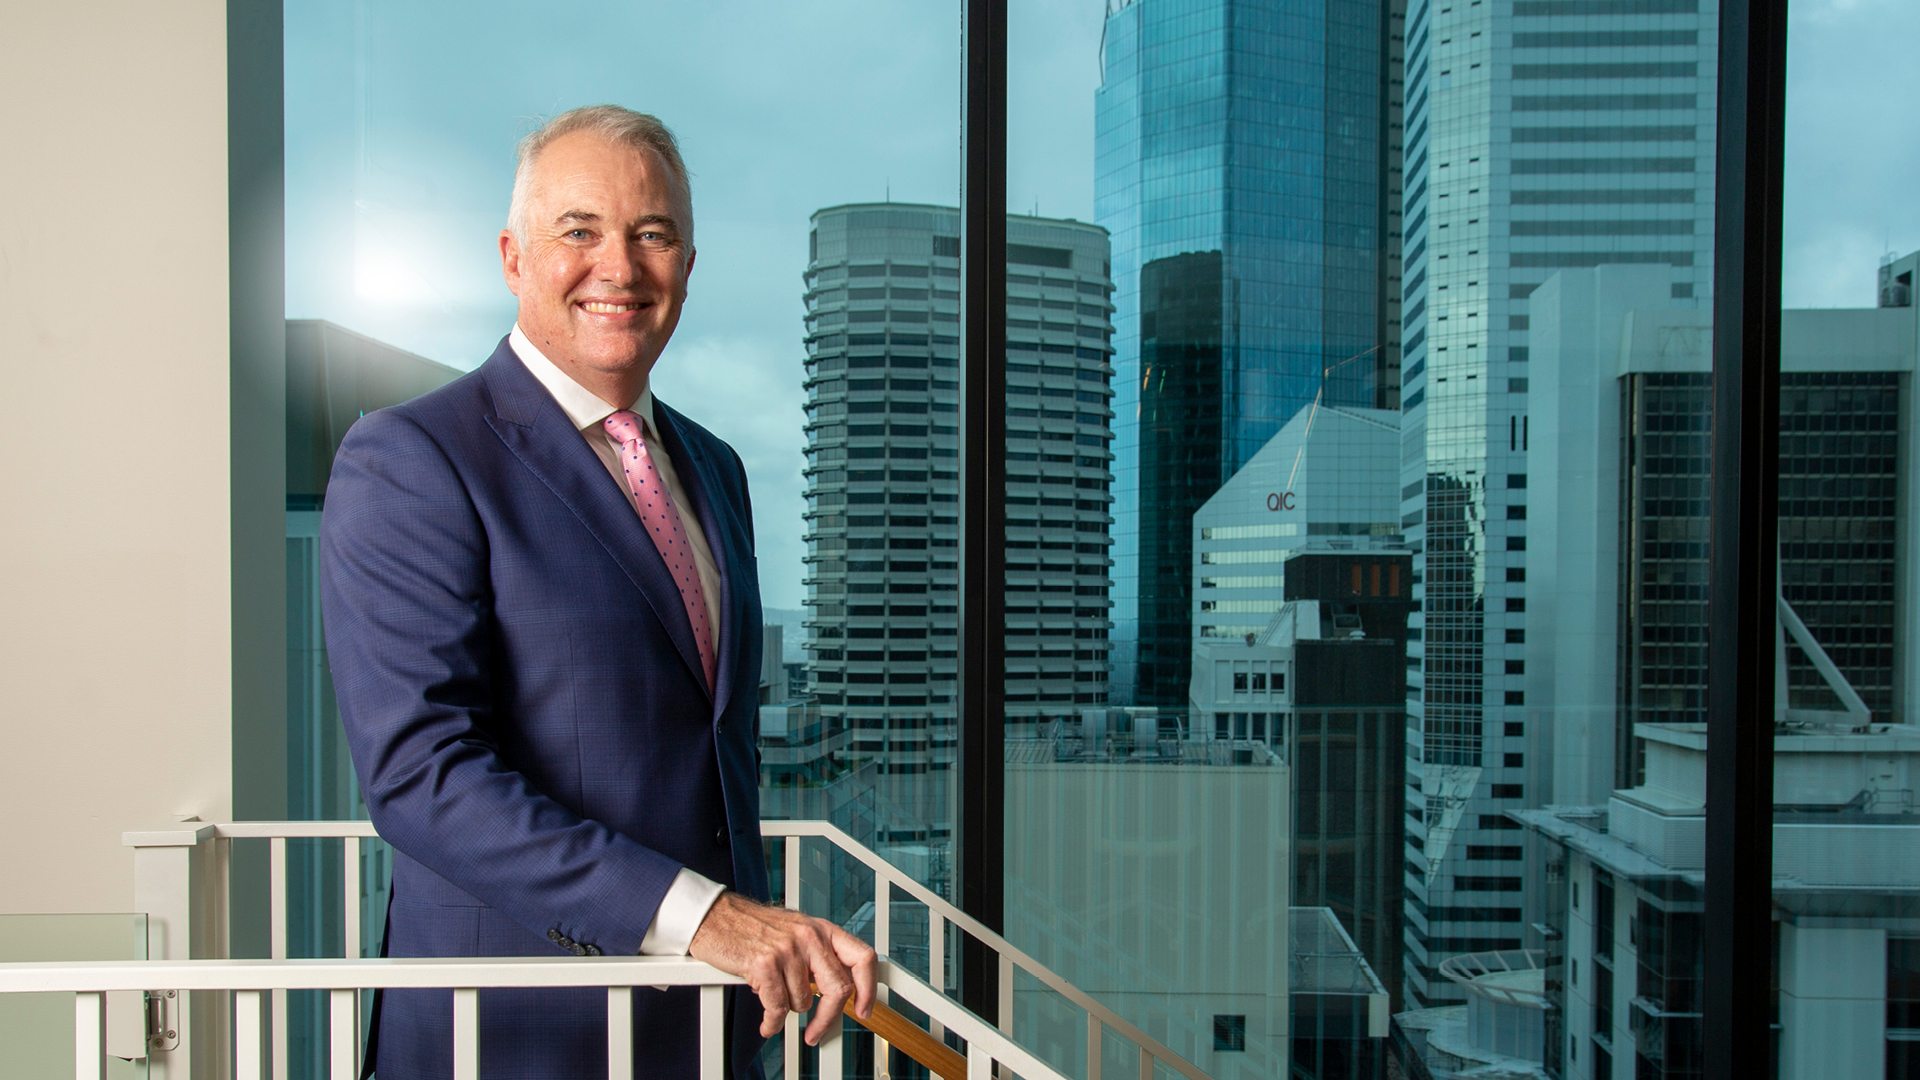 Allianz Australia CEO Chris McHugh on looking forward